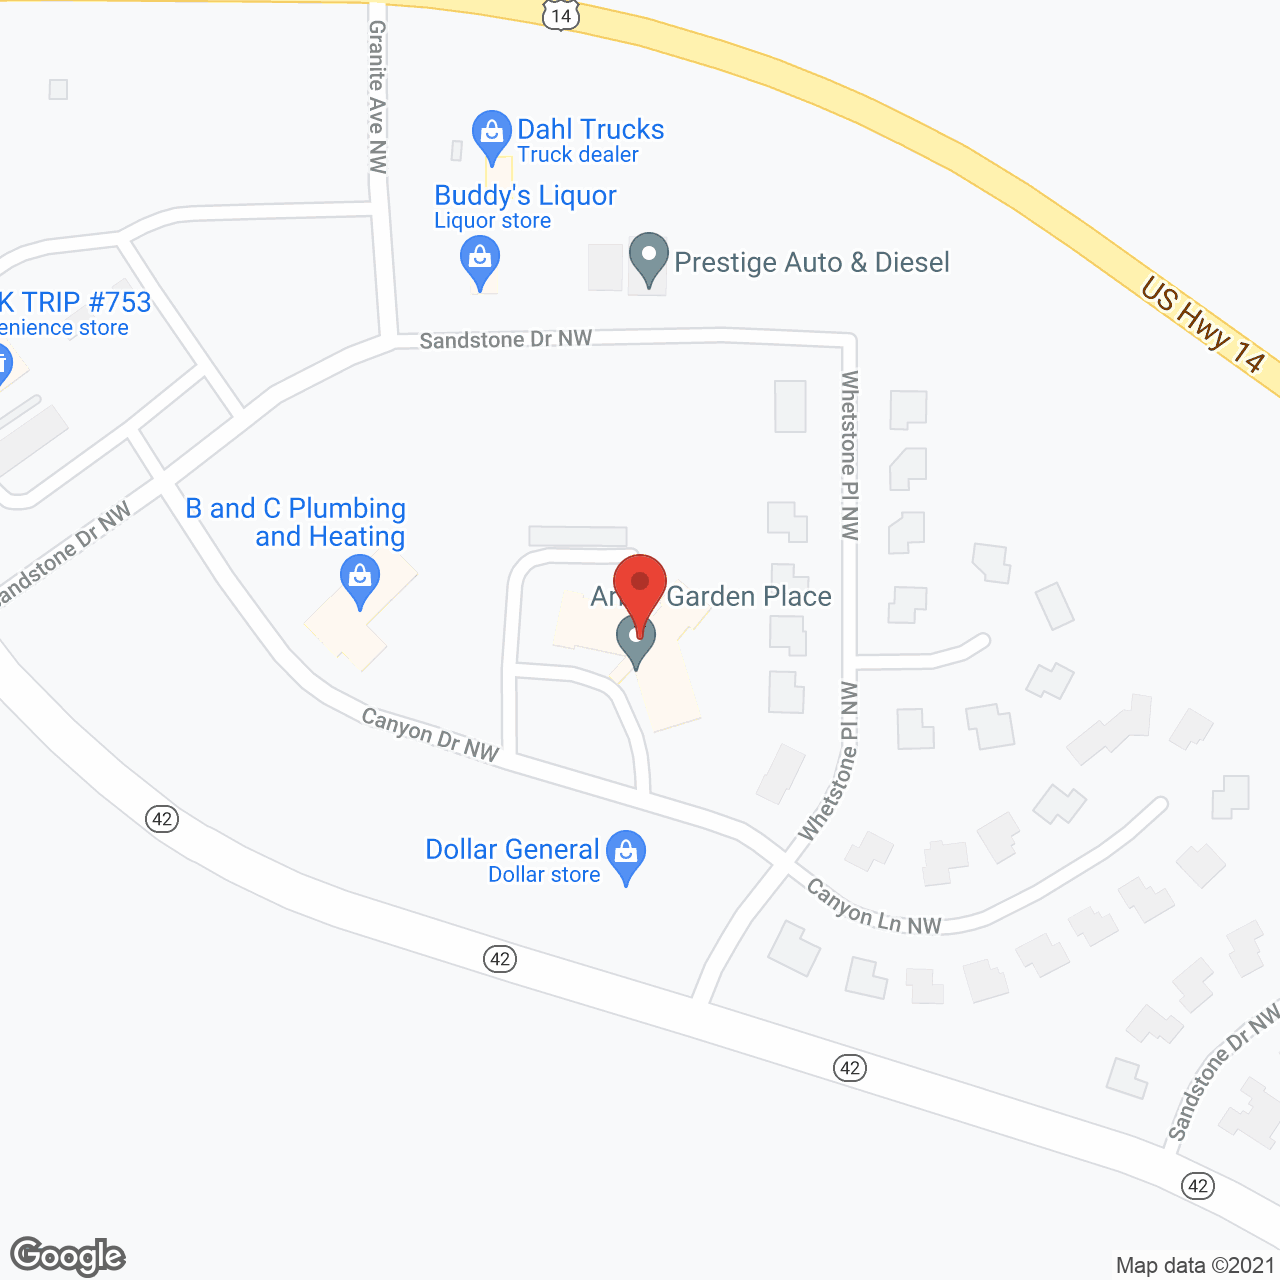 Arbor Garden Place in google map